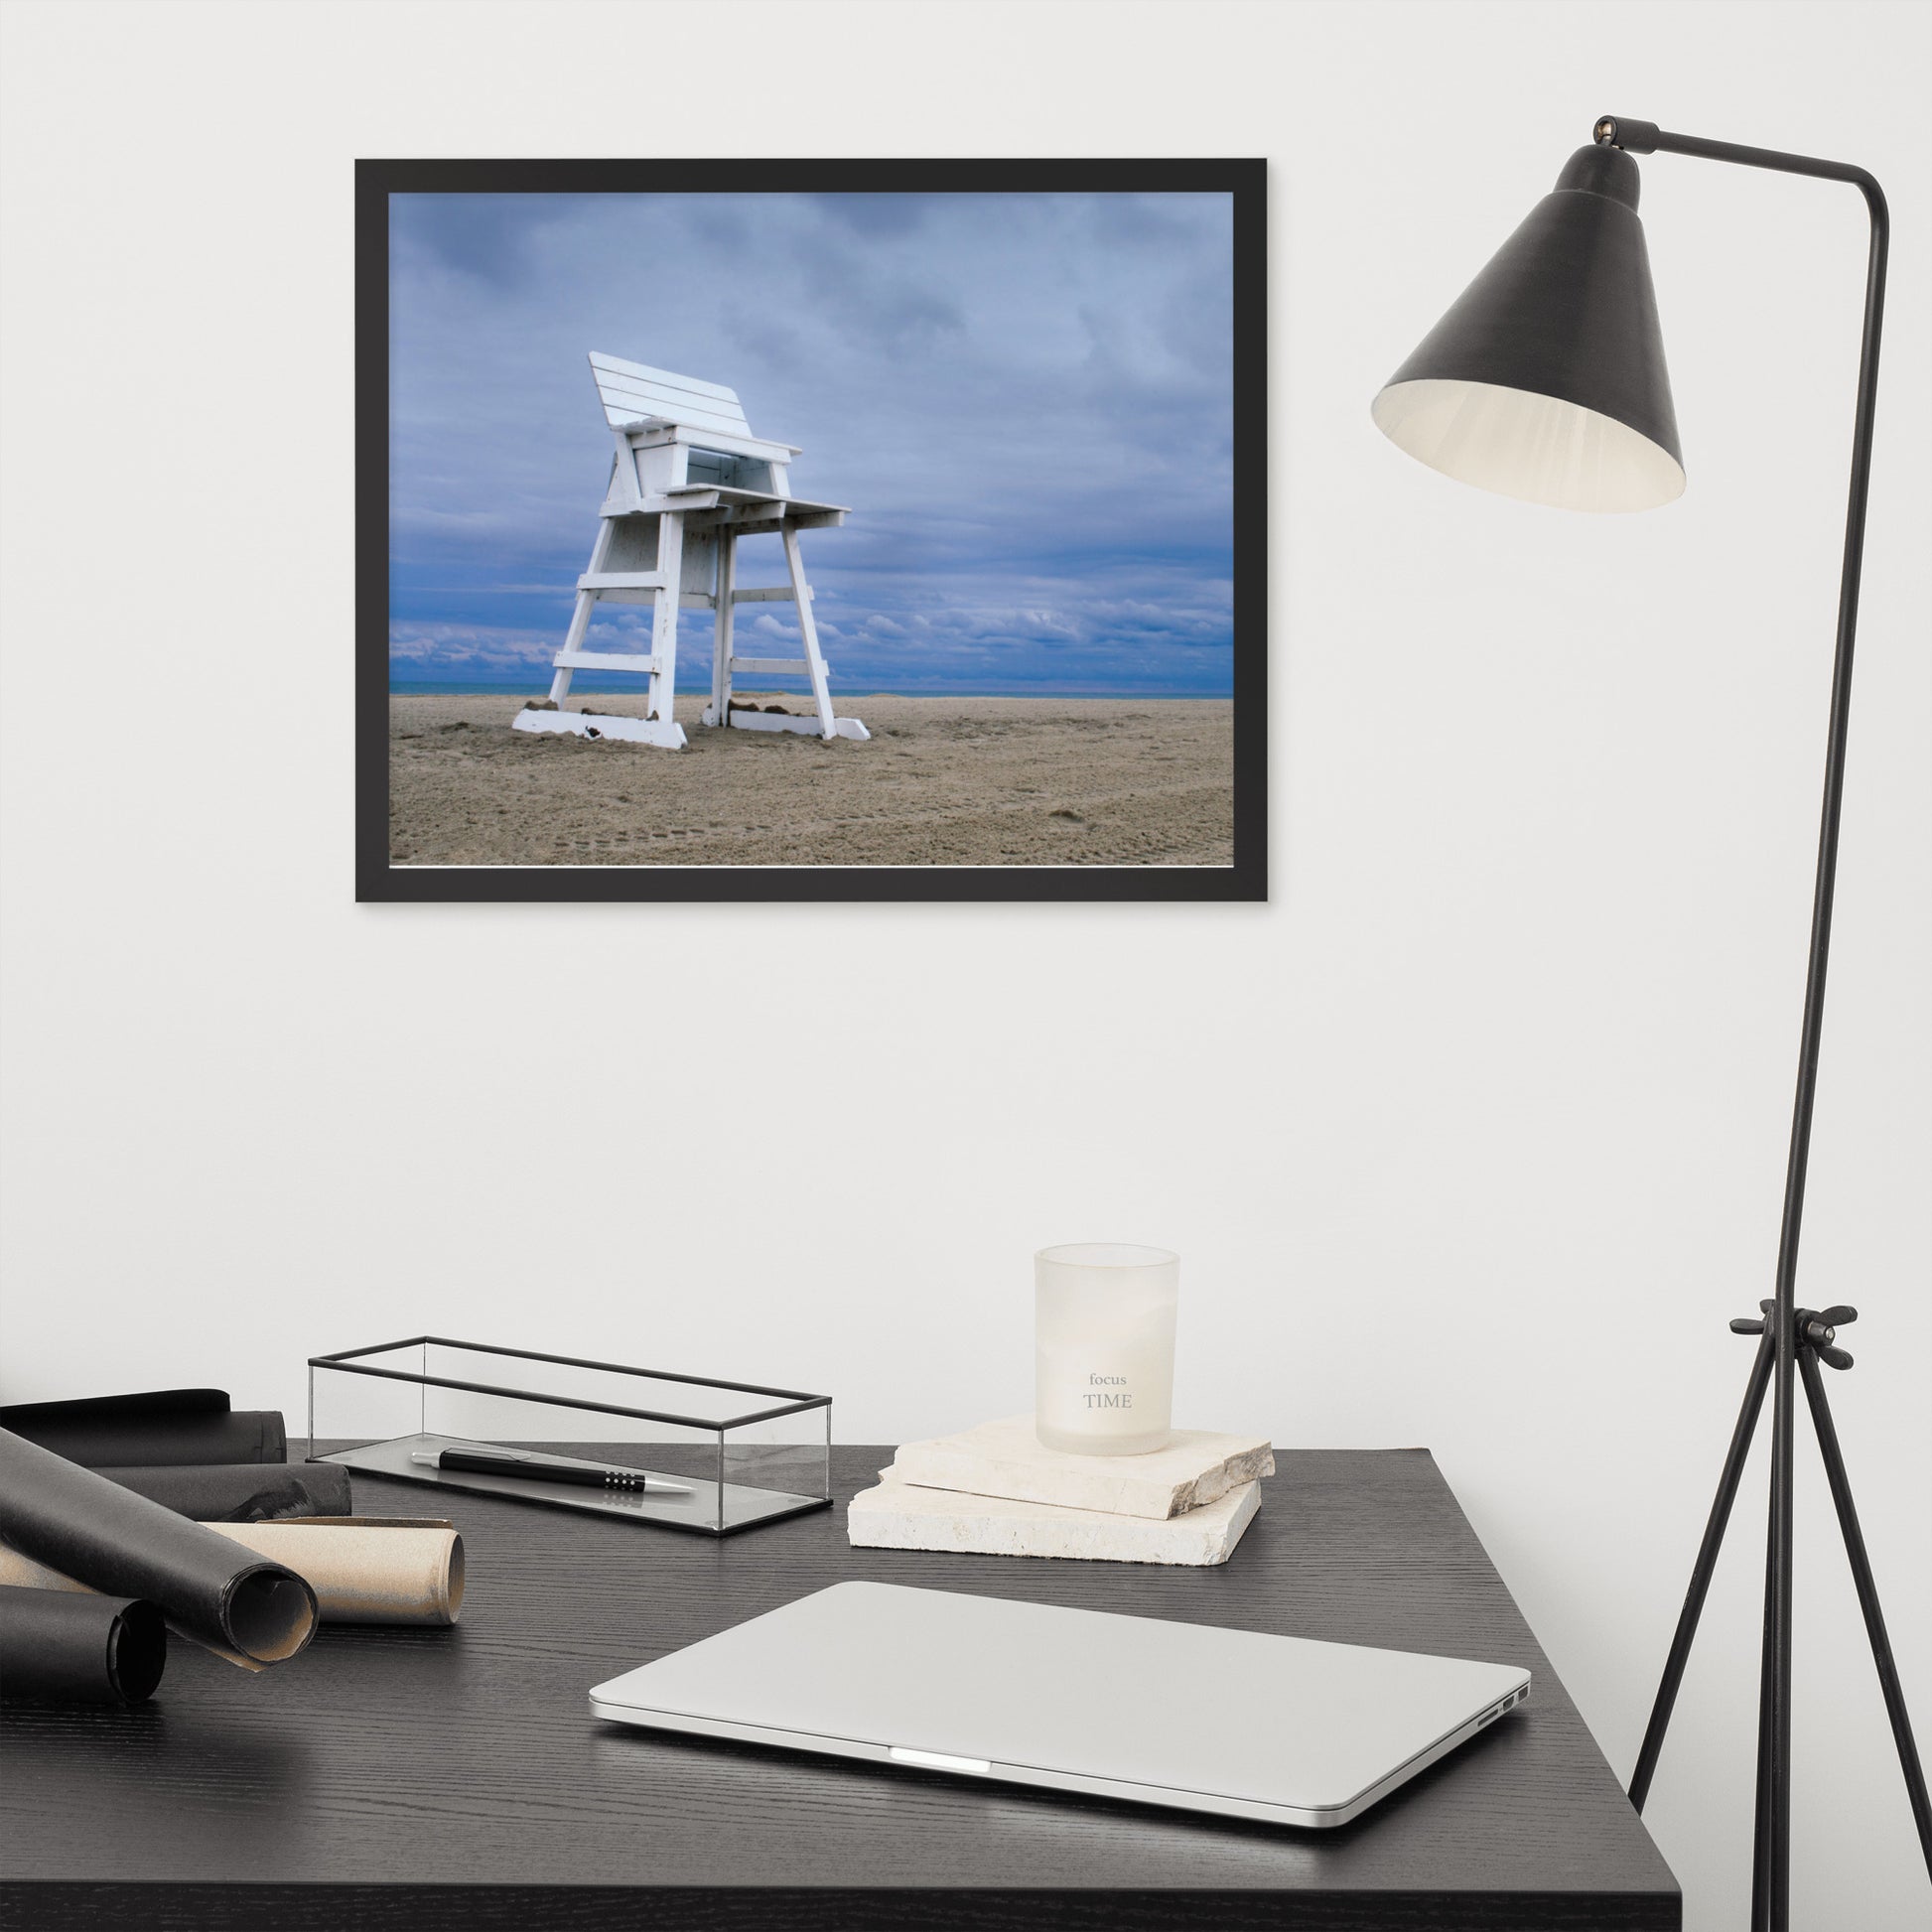 Cool Home Office Art: Approaching Storm - Coastal / Beach / Seascape / Nature / Landscape Photo Framed Wall Art Print - Artwork